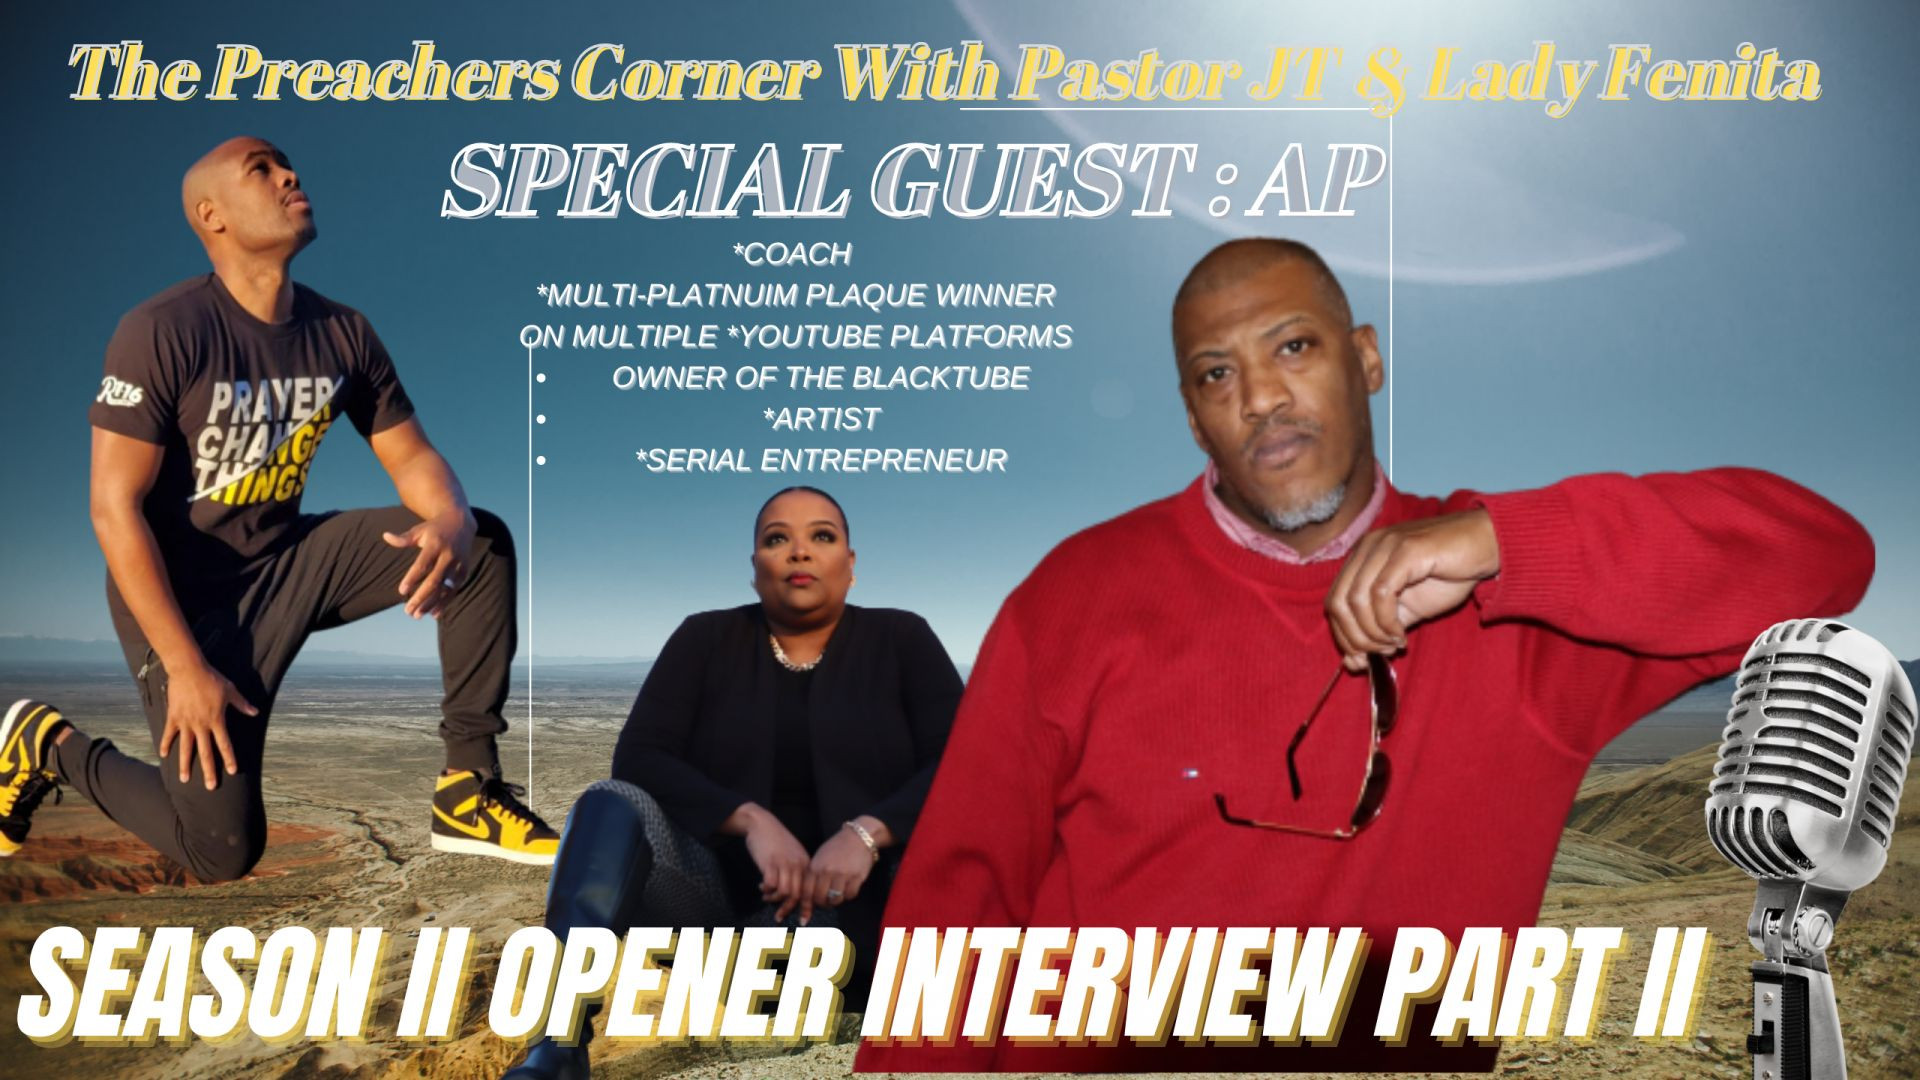 THE PREACHERS CORNER EXCLUSIVE  INTERVIEW With AP  PART II